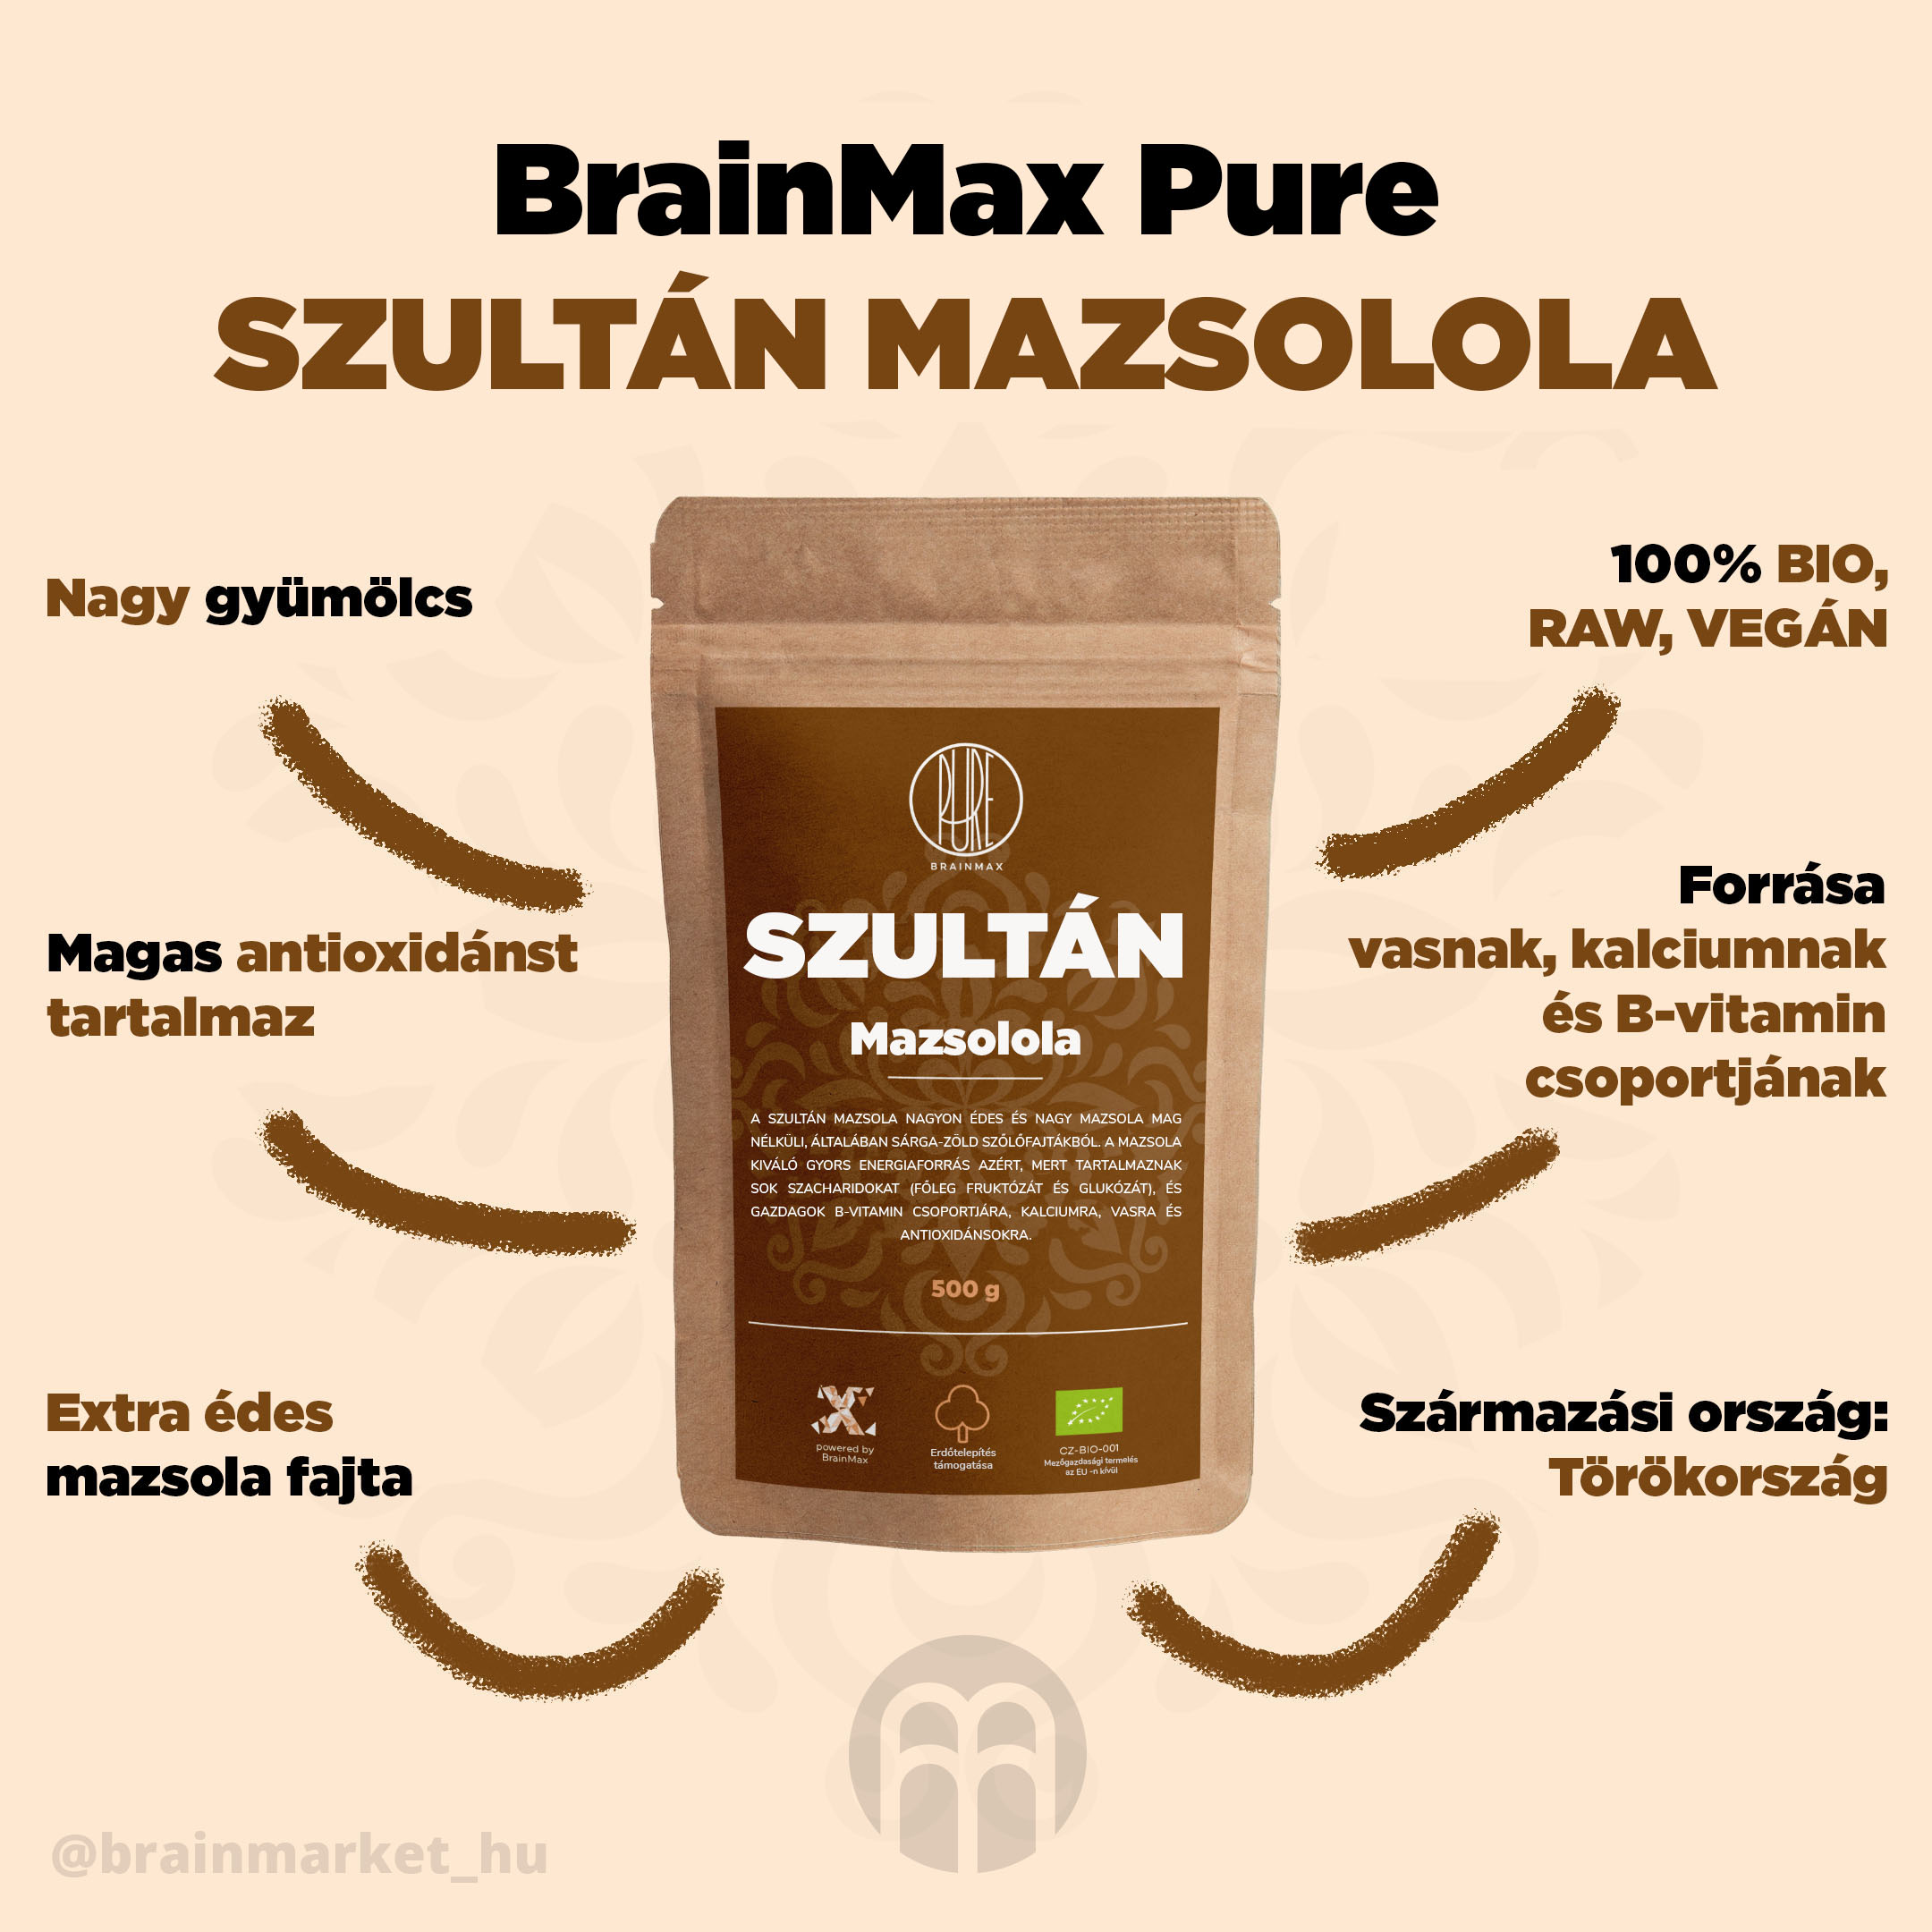 BrainMax Pure Sultanas mazsola - BrainMarket.cz